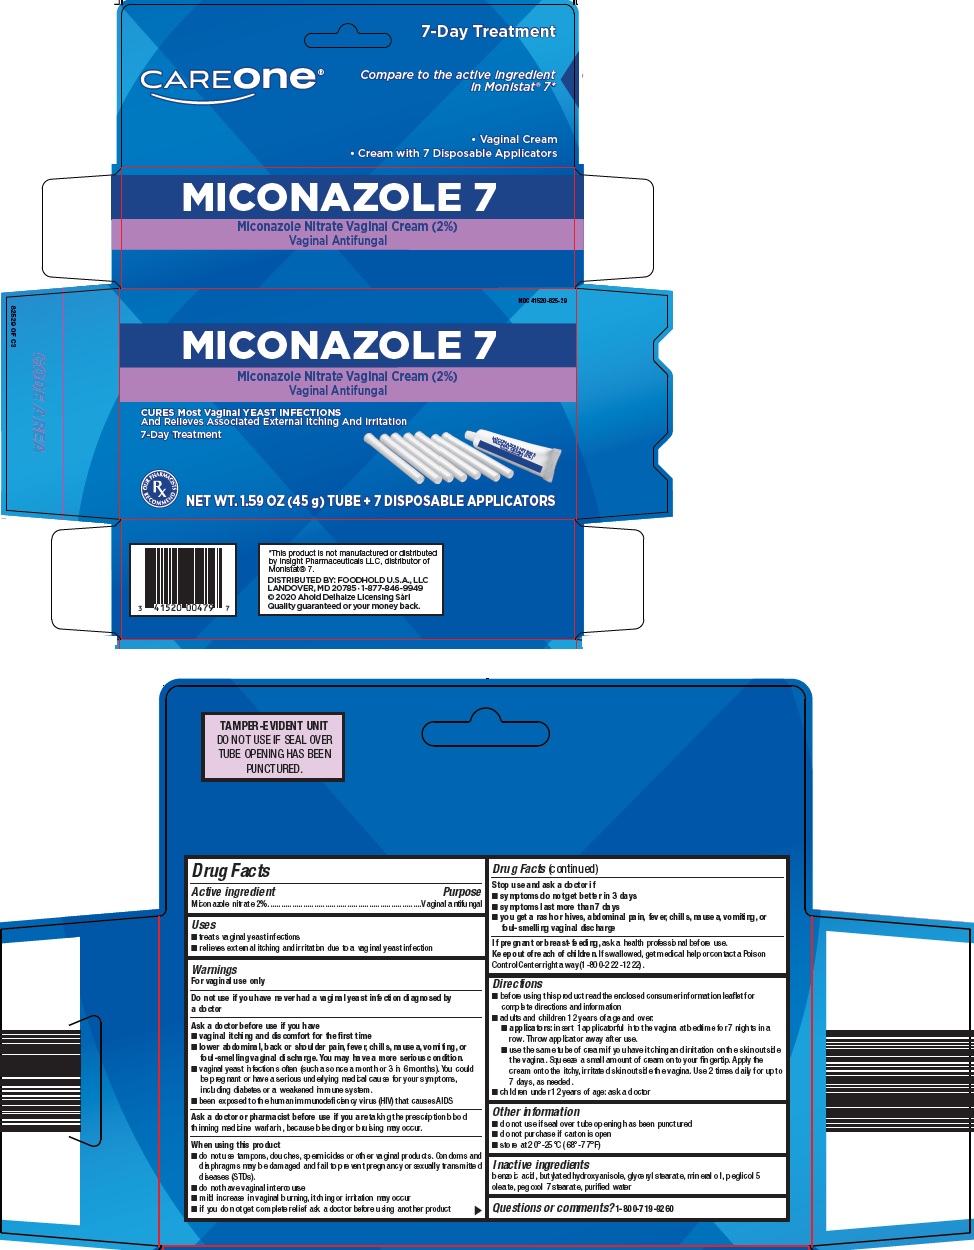 Careone Miconazole 7 | Miconazole Nitrate Cream while Breastfeeding